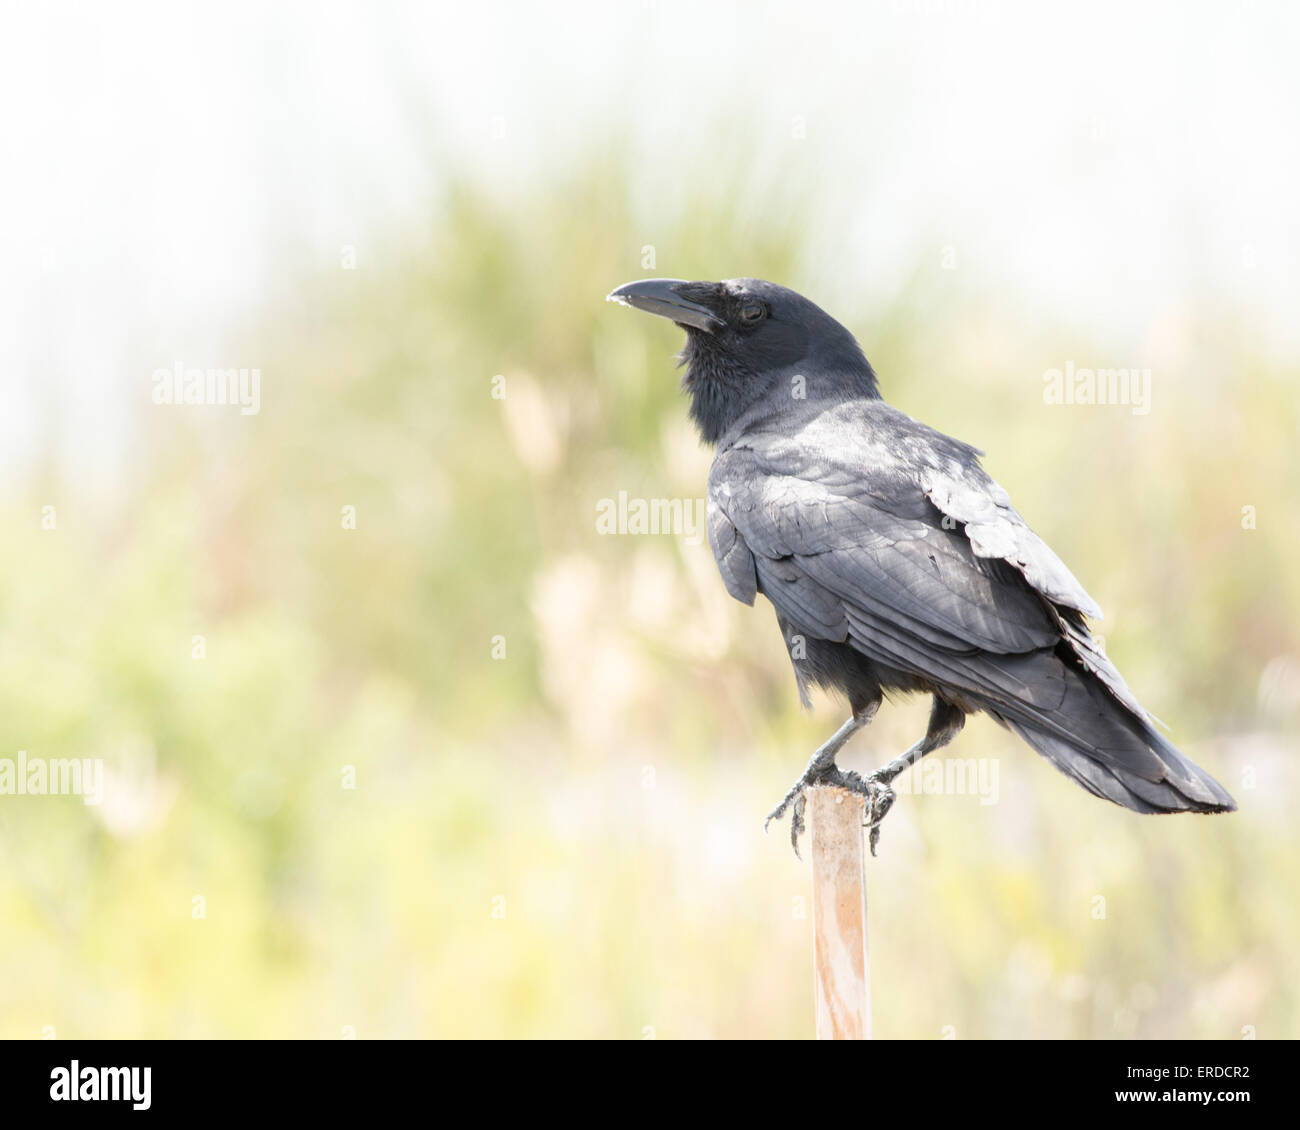 A black Raven Perched on a stick. Stock Photo